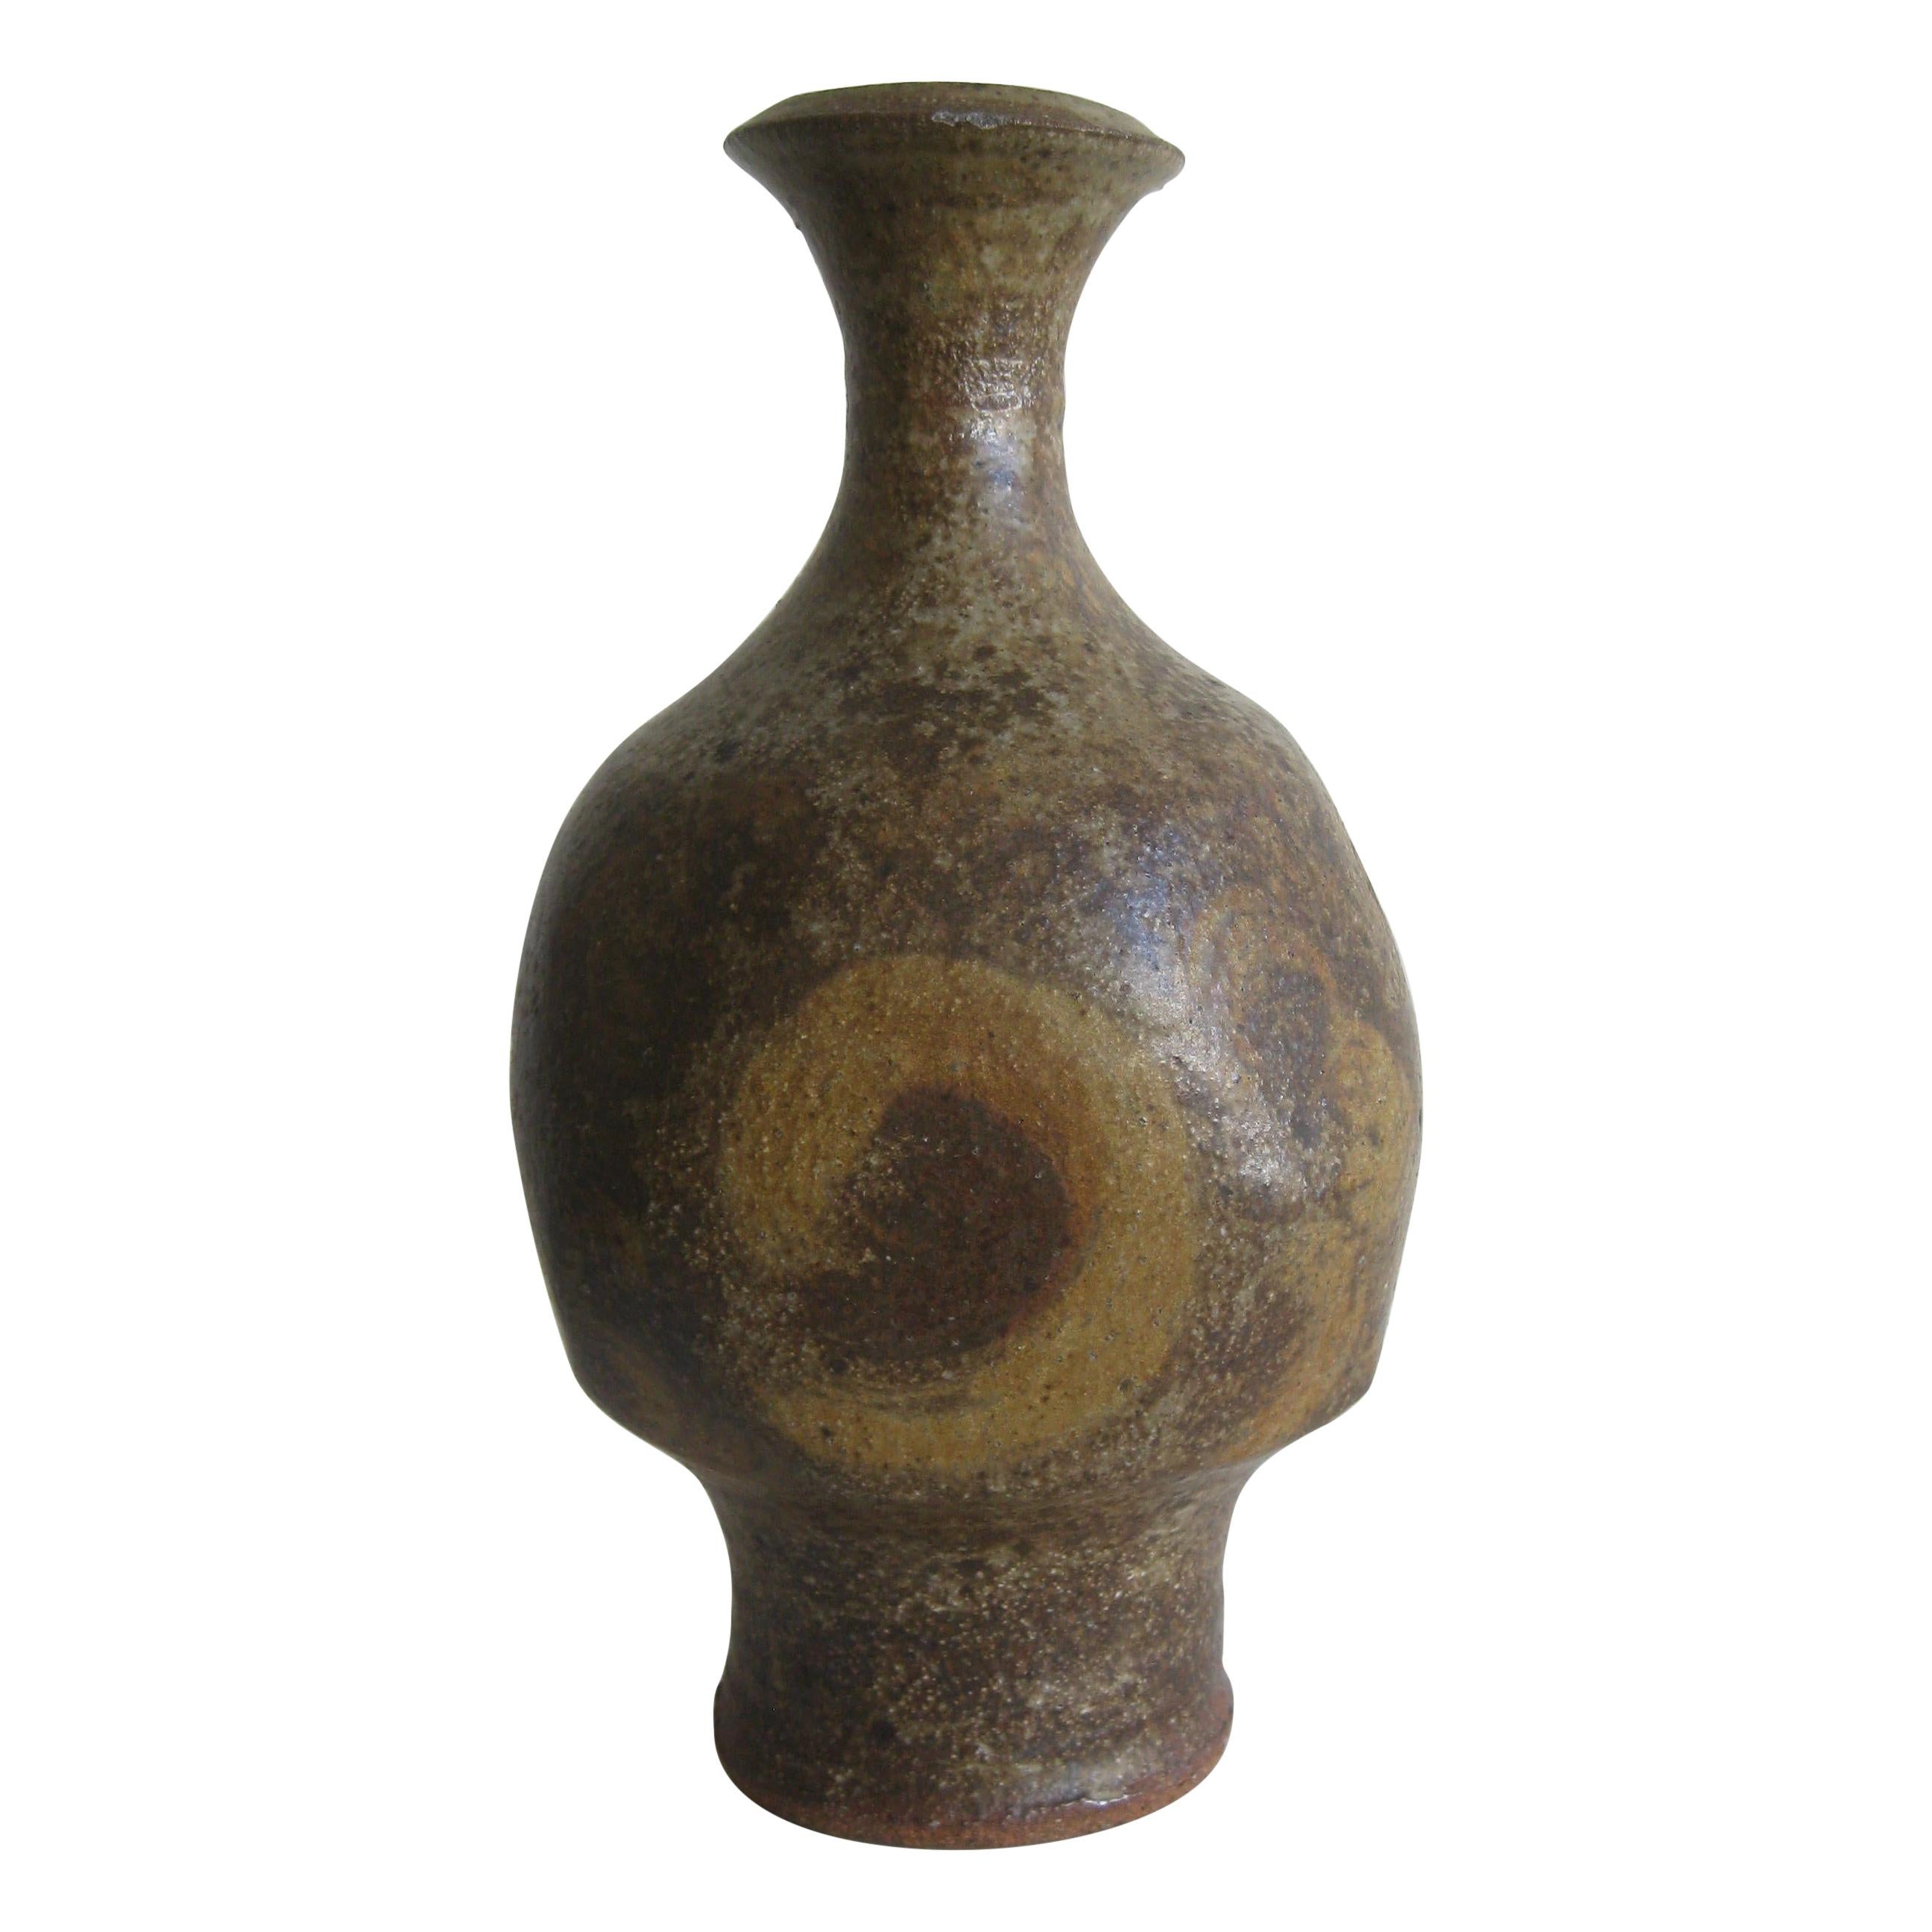 Robert Fournier British Studio Art Pottery Modernist Stoneware Vase Vessel Big